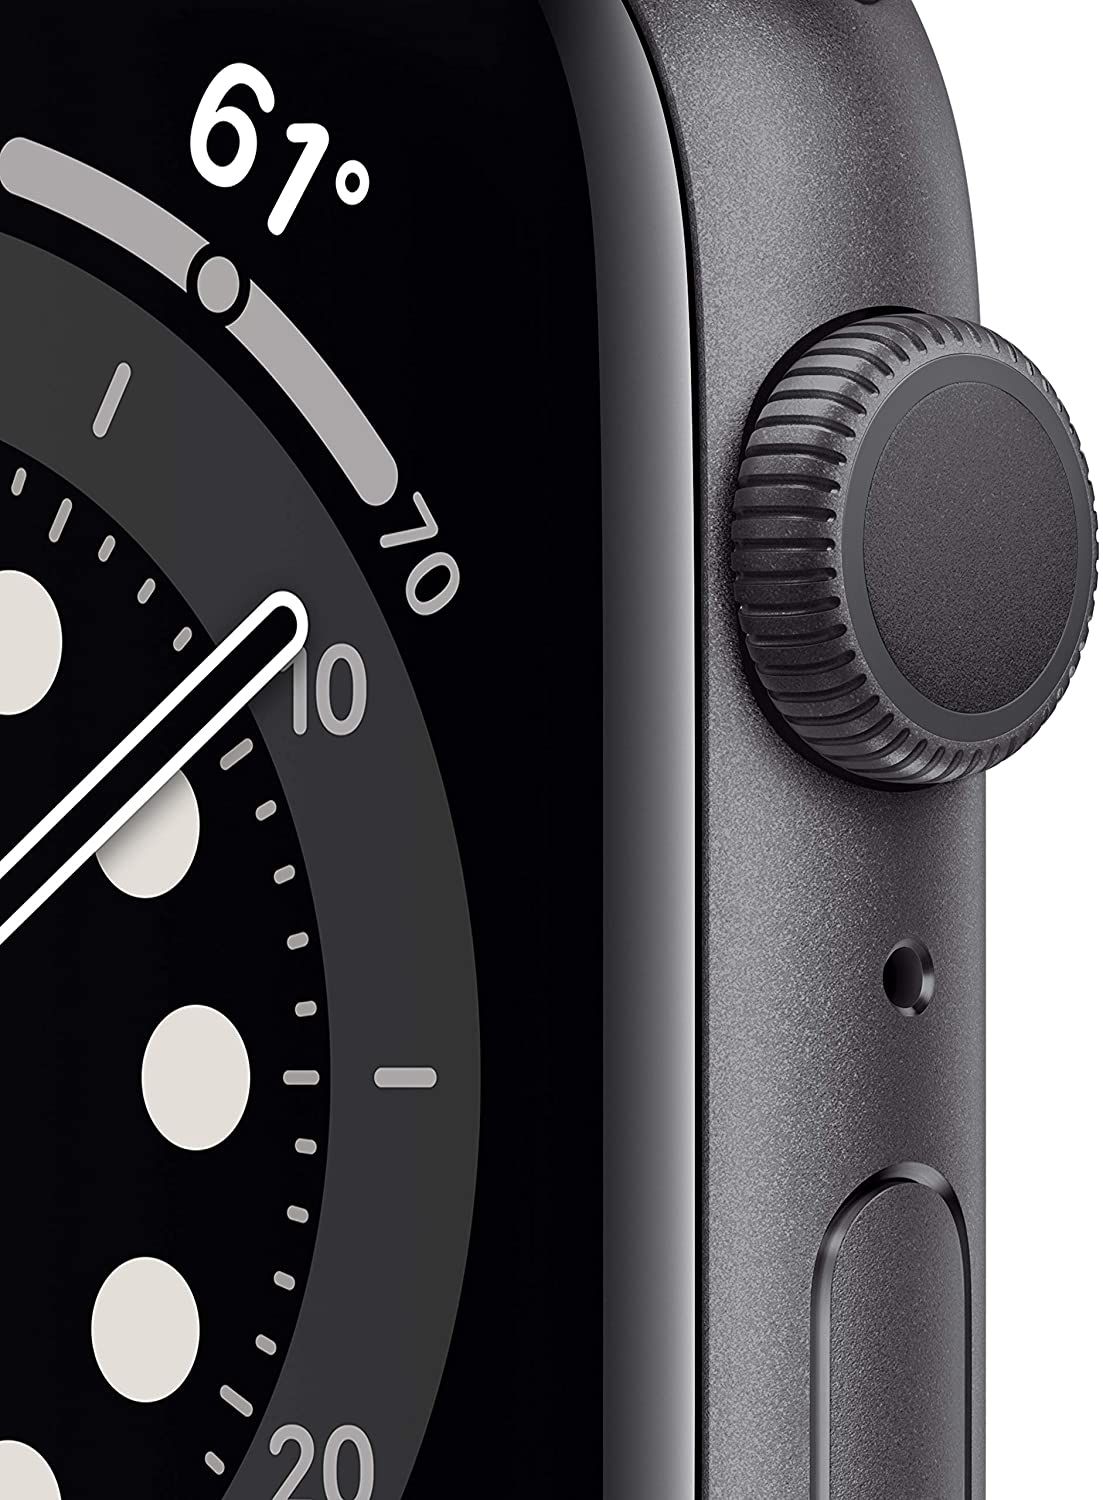 Apple Watch Series 6 buttons